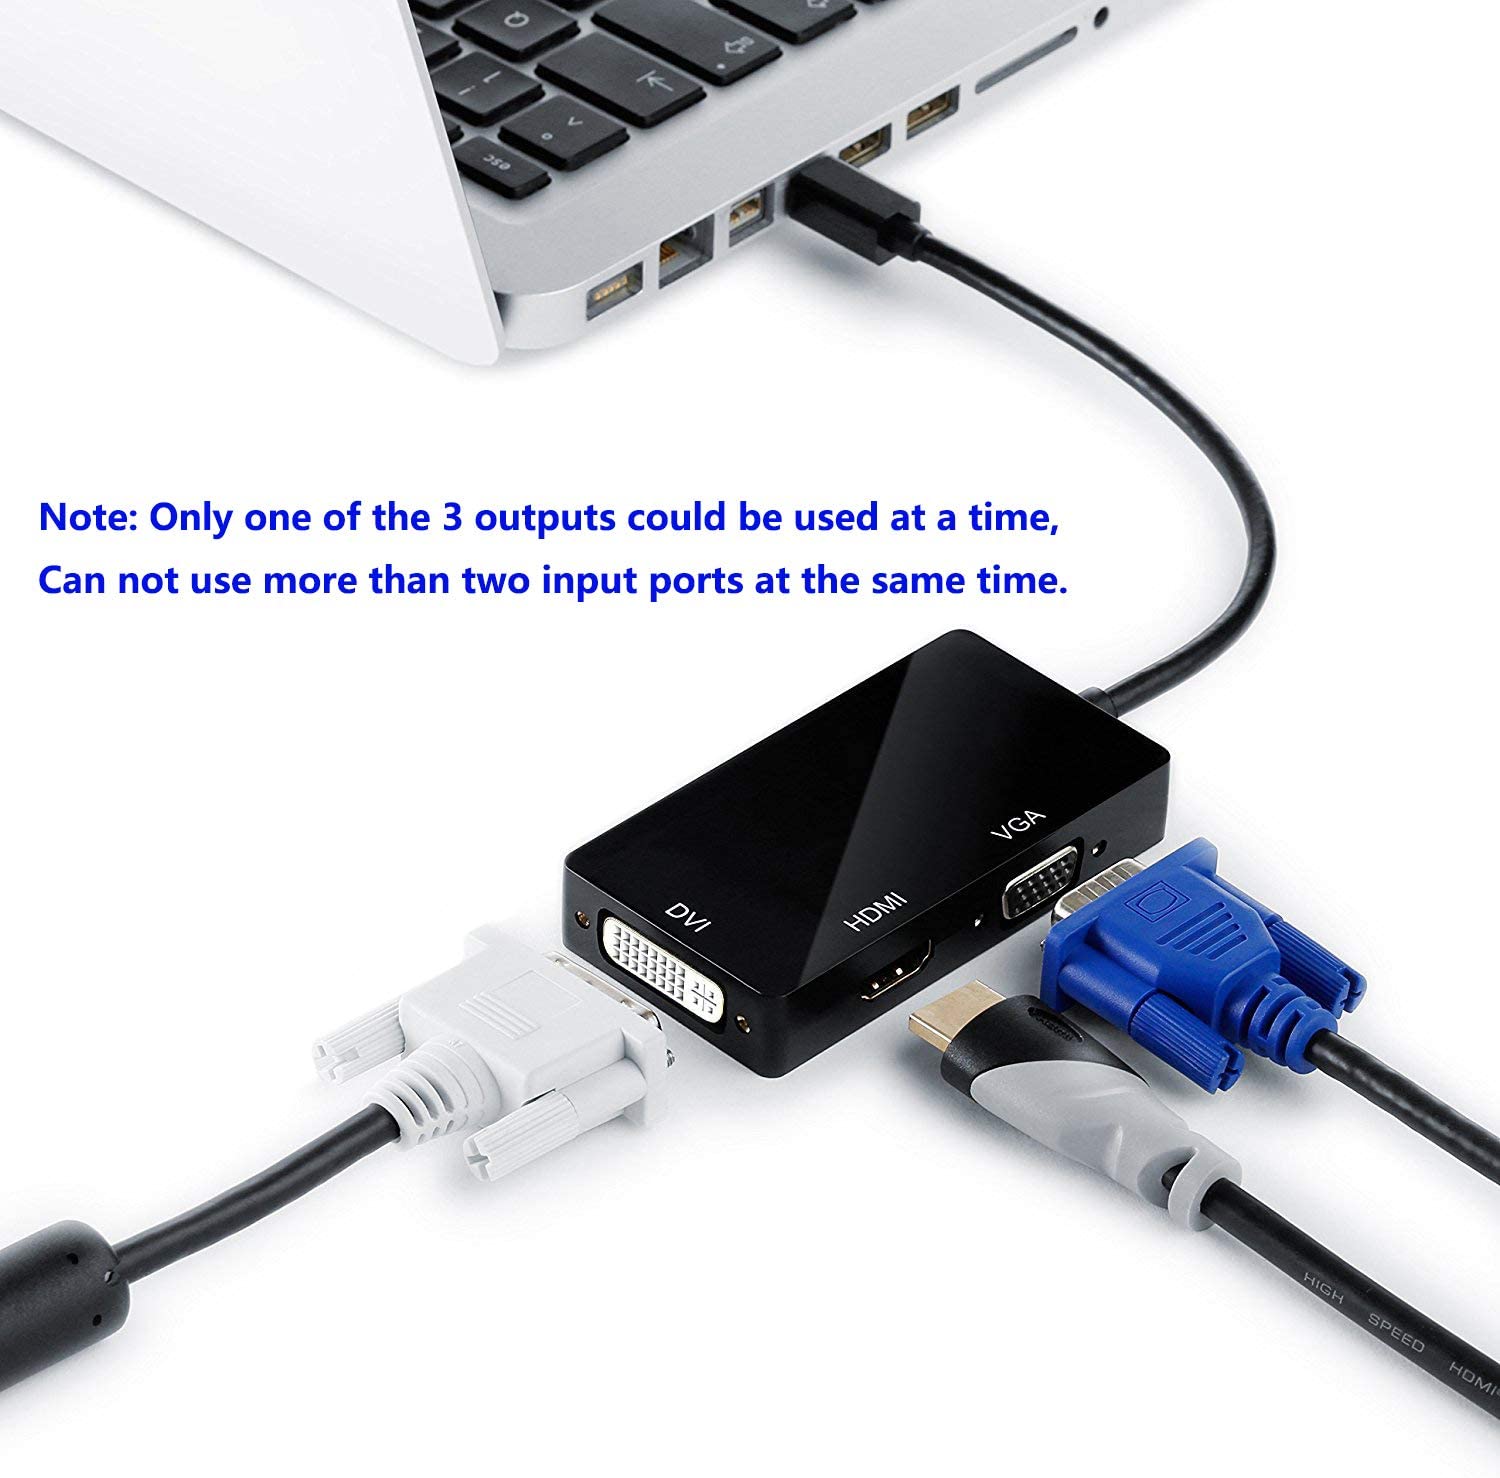 Mini Displayport to HDMI DVI VGA Adapter. - e4cents